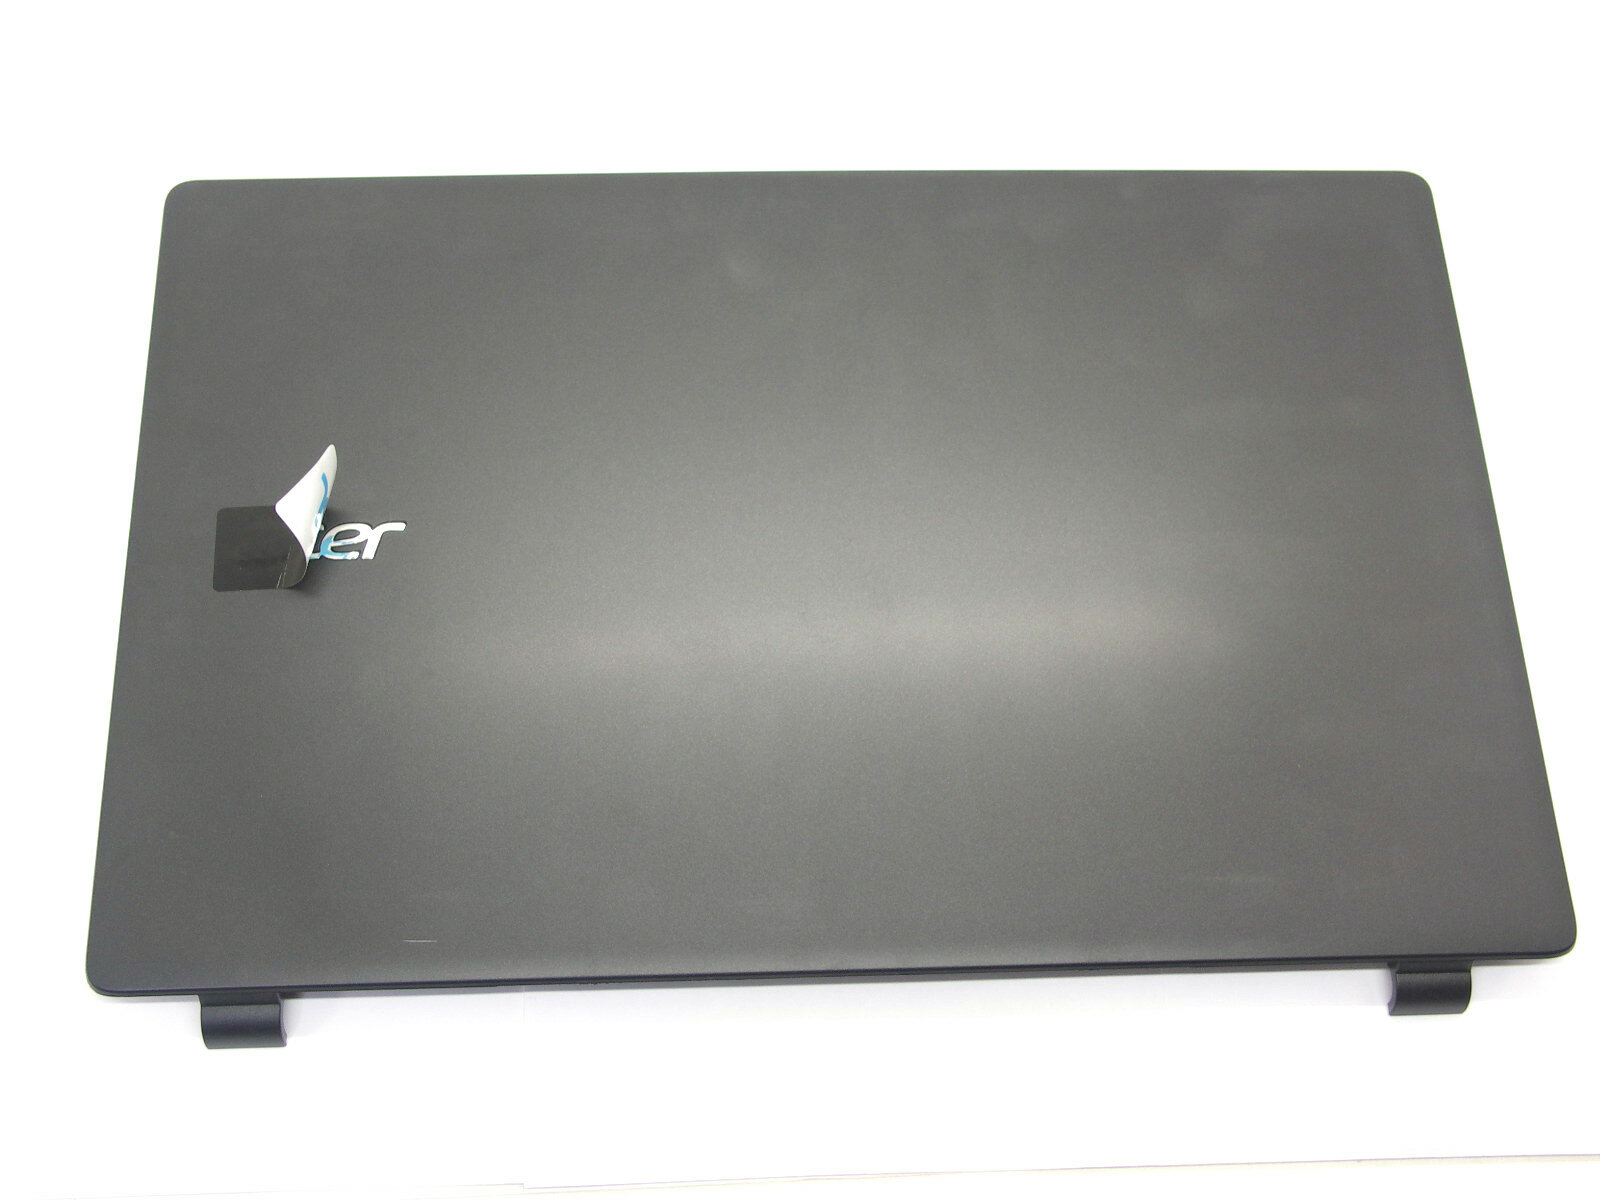 Крышка матрицы для ноутбука Acer Aspire V3-572V3-572G V3-523 M5-551 E5-511 E5-511G E5-571G E5-521 E5-521G матовый черный (BP-A-01)